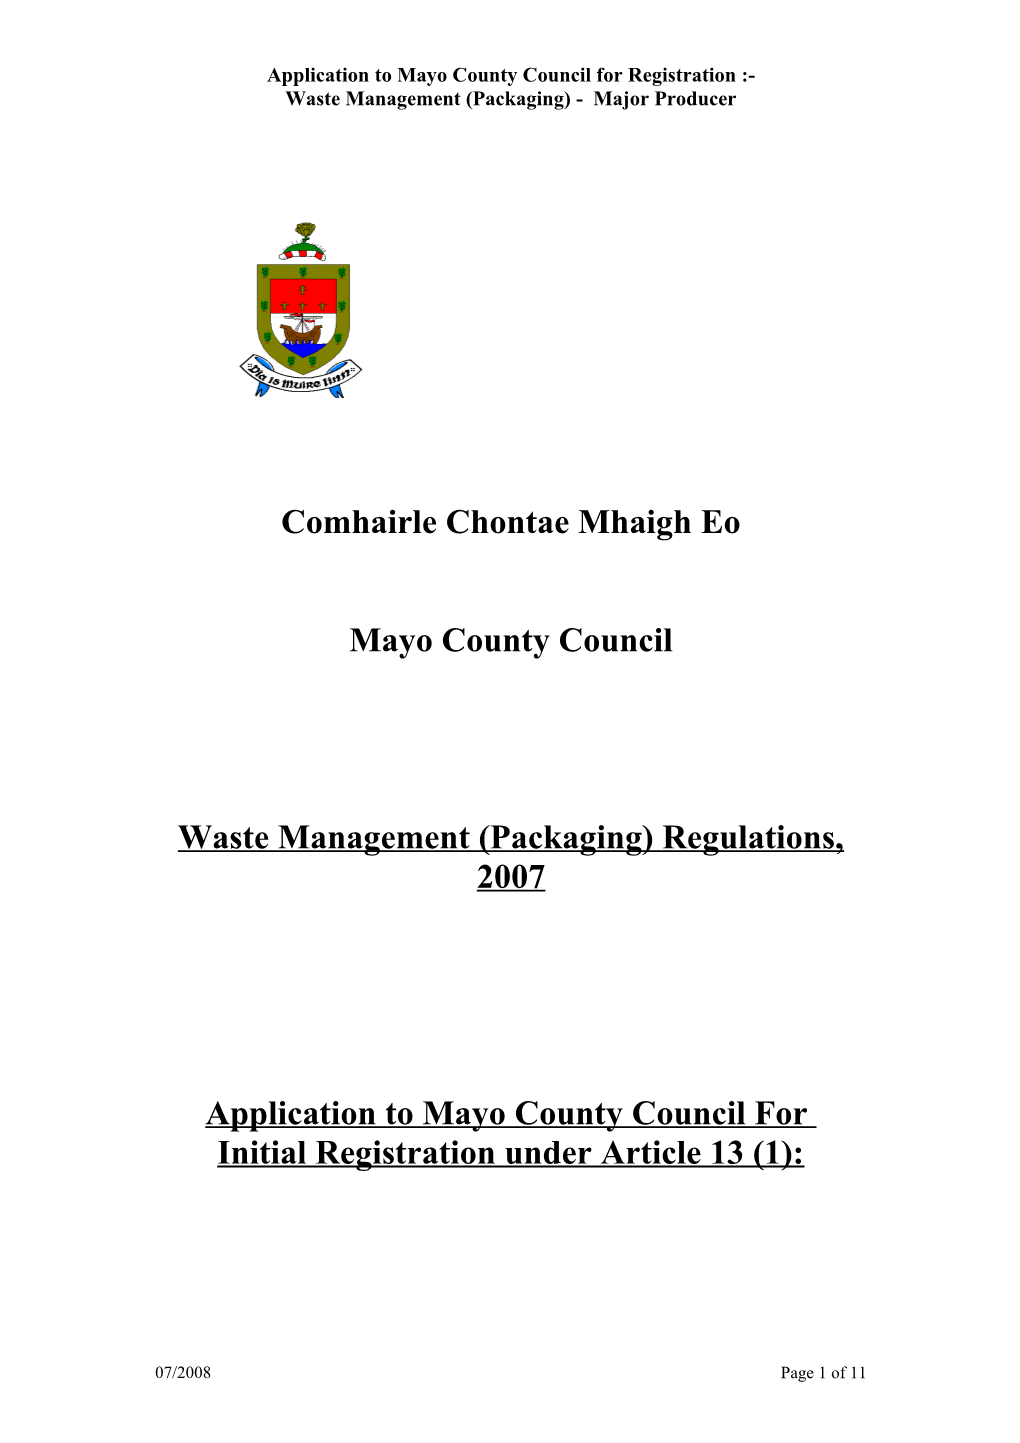 Waste Management (Packaging) Regulations, 1997